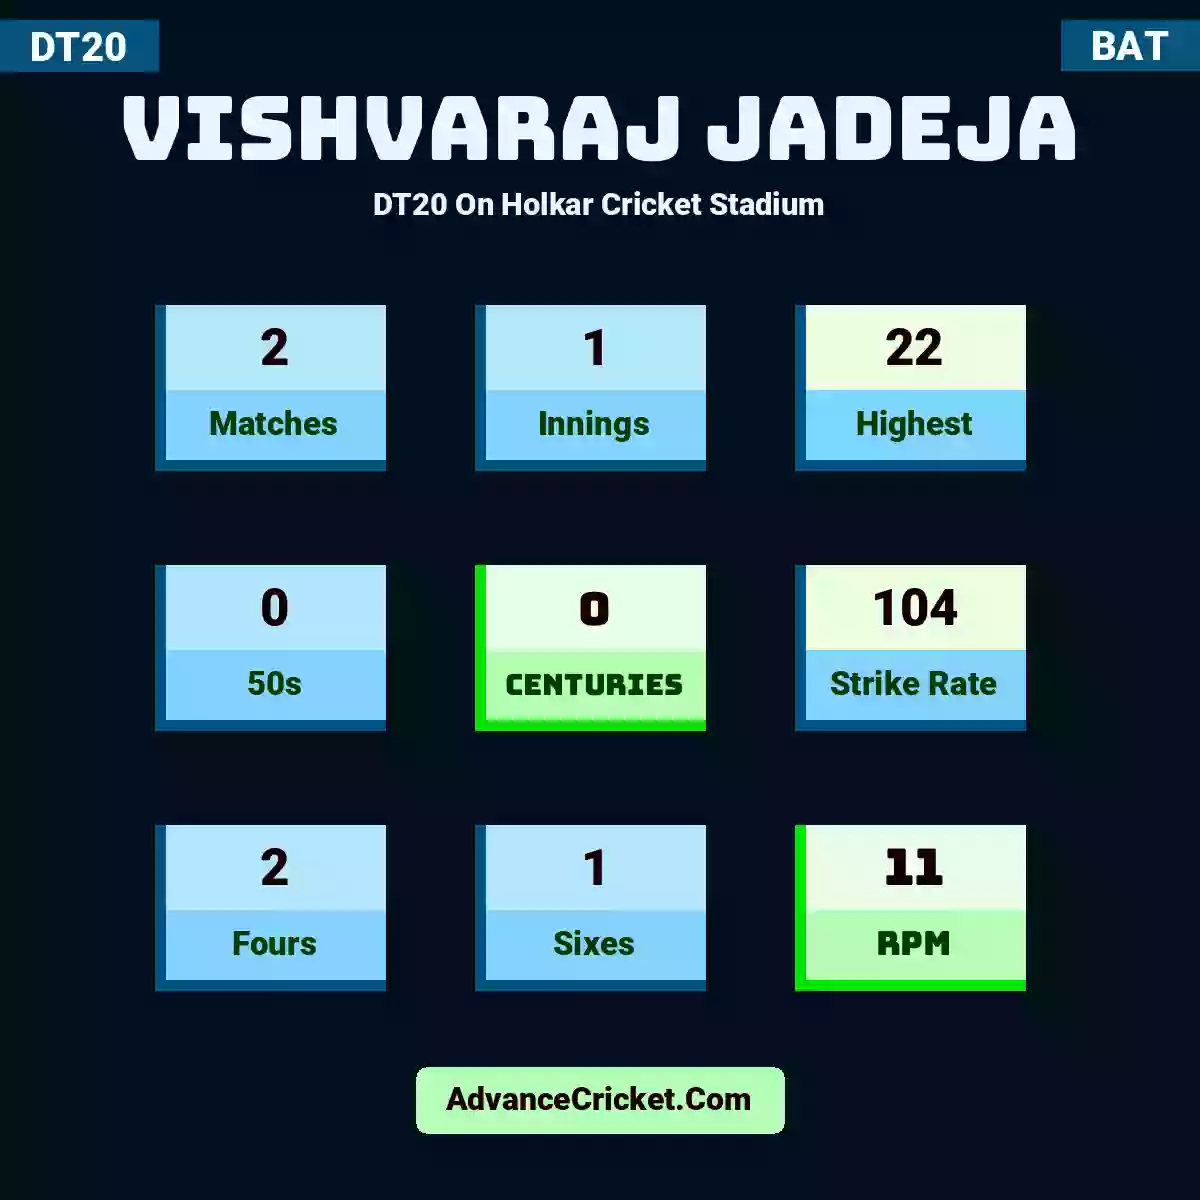 Vishvaraj Jadeja DT20  On Holkar Cricket Stadium, Vishvaraj Jadeja played 2 matches, scored 22 runs as highest, 0 half-centuries, and 0 centuries, with a strike rate of 104. V.Jadeja hit 2 fours and 1 sixes, with an RPM of 11.